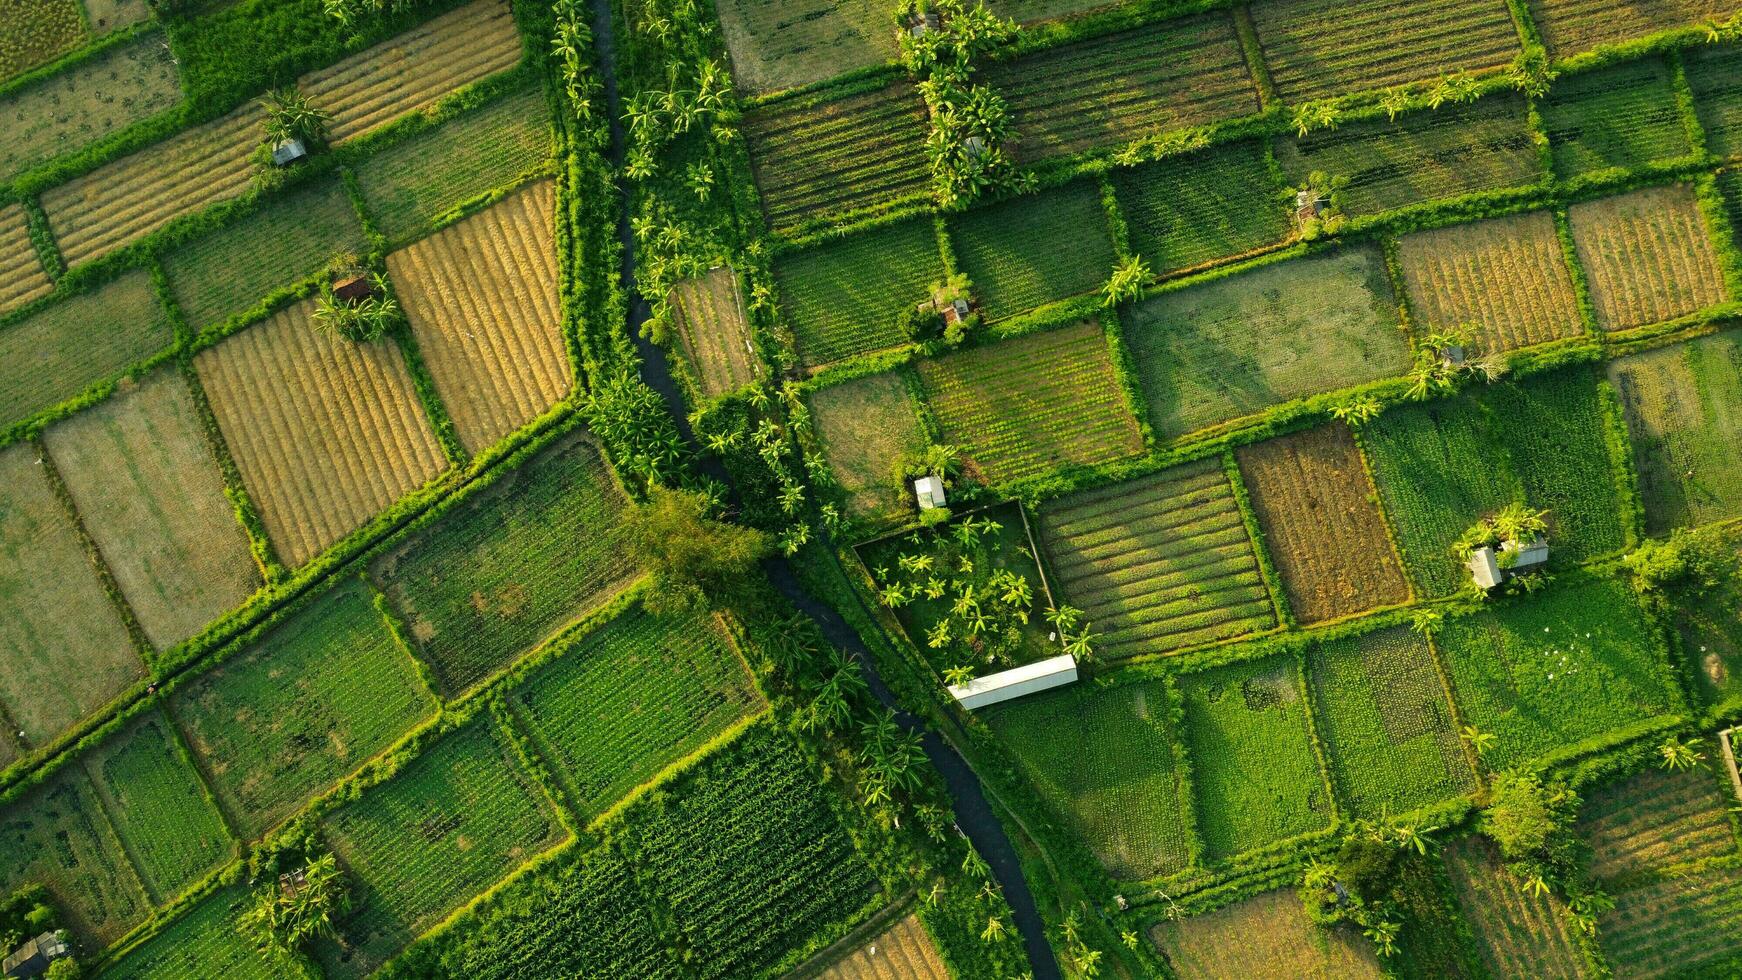 Bali Green Farm Rice Field Top View Shot photo